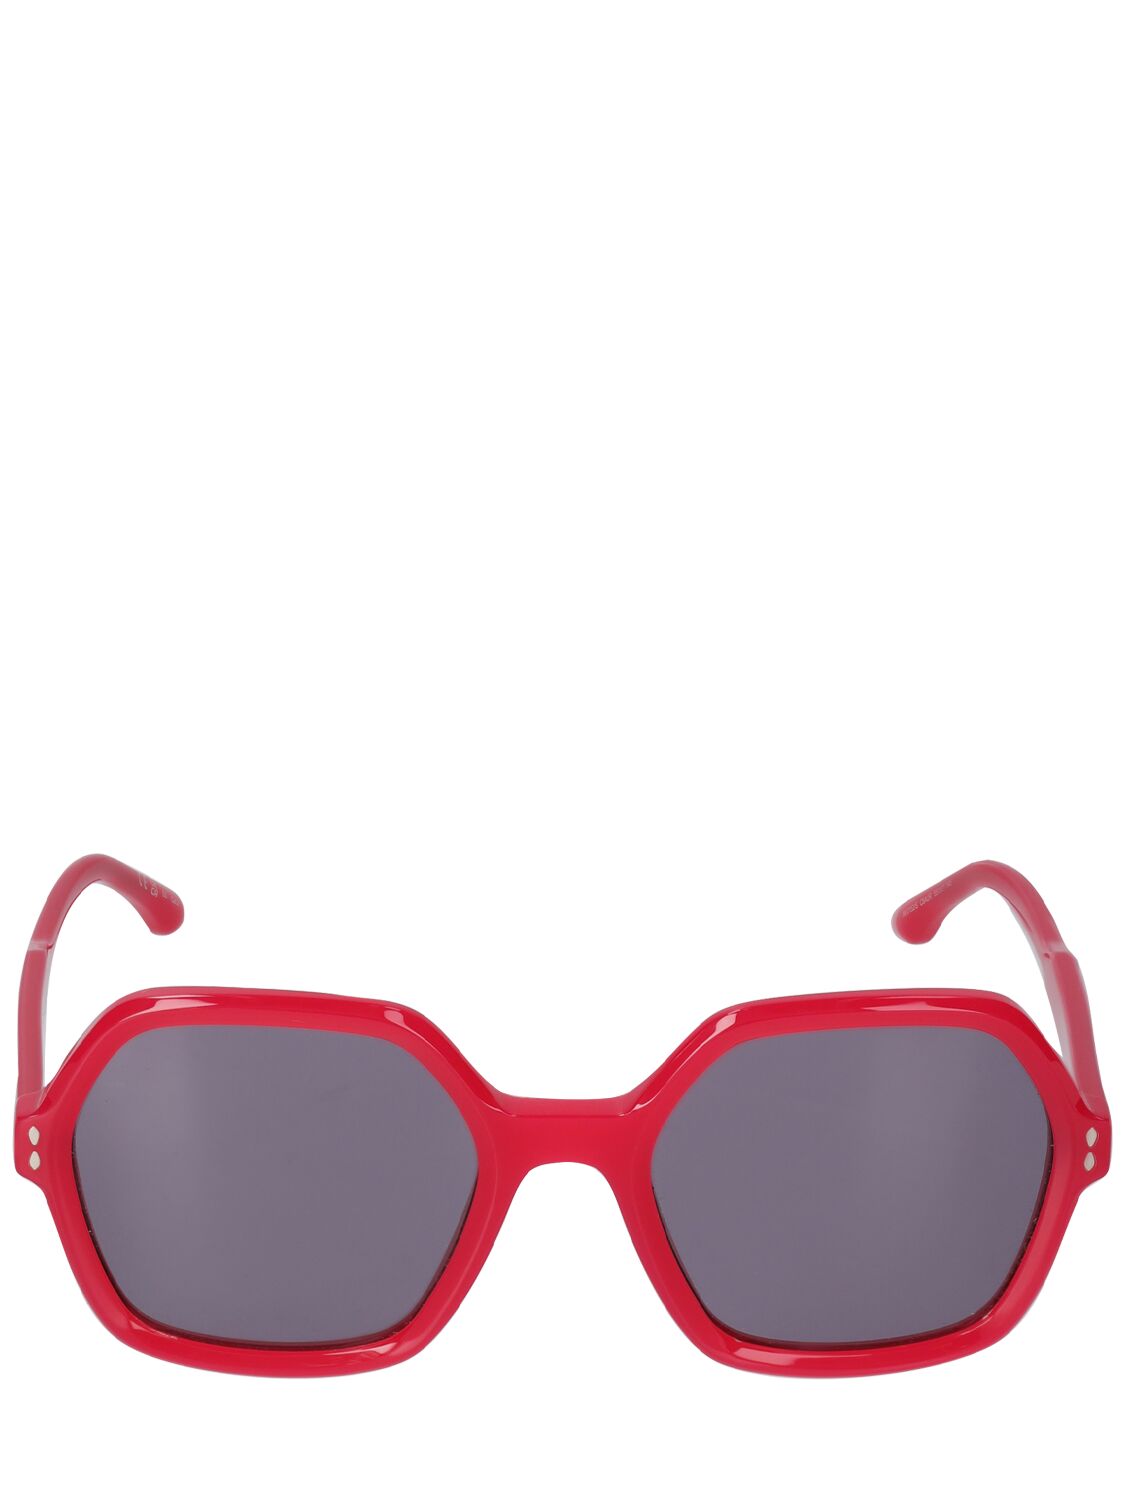 Image of The In Love Classic Acetate Sunglasses